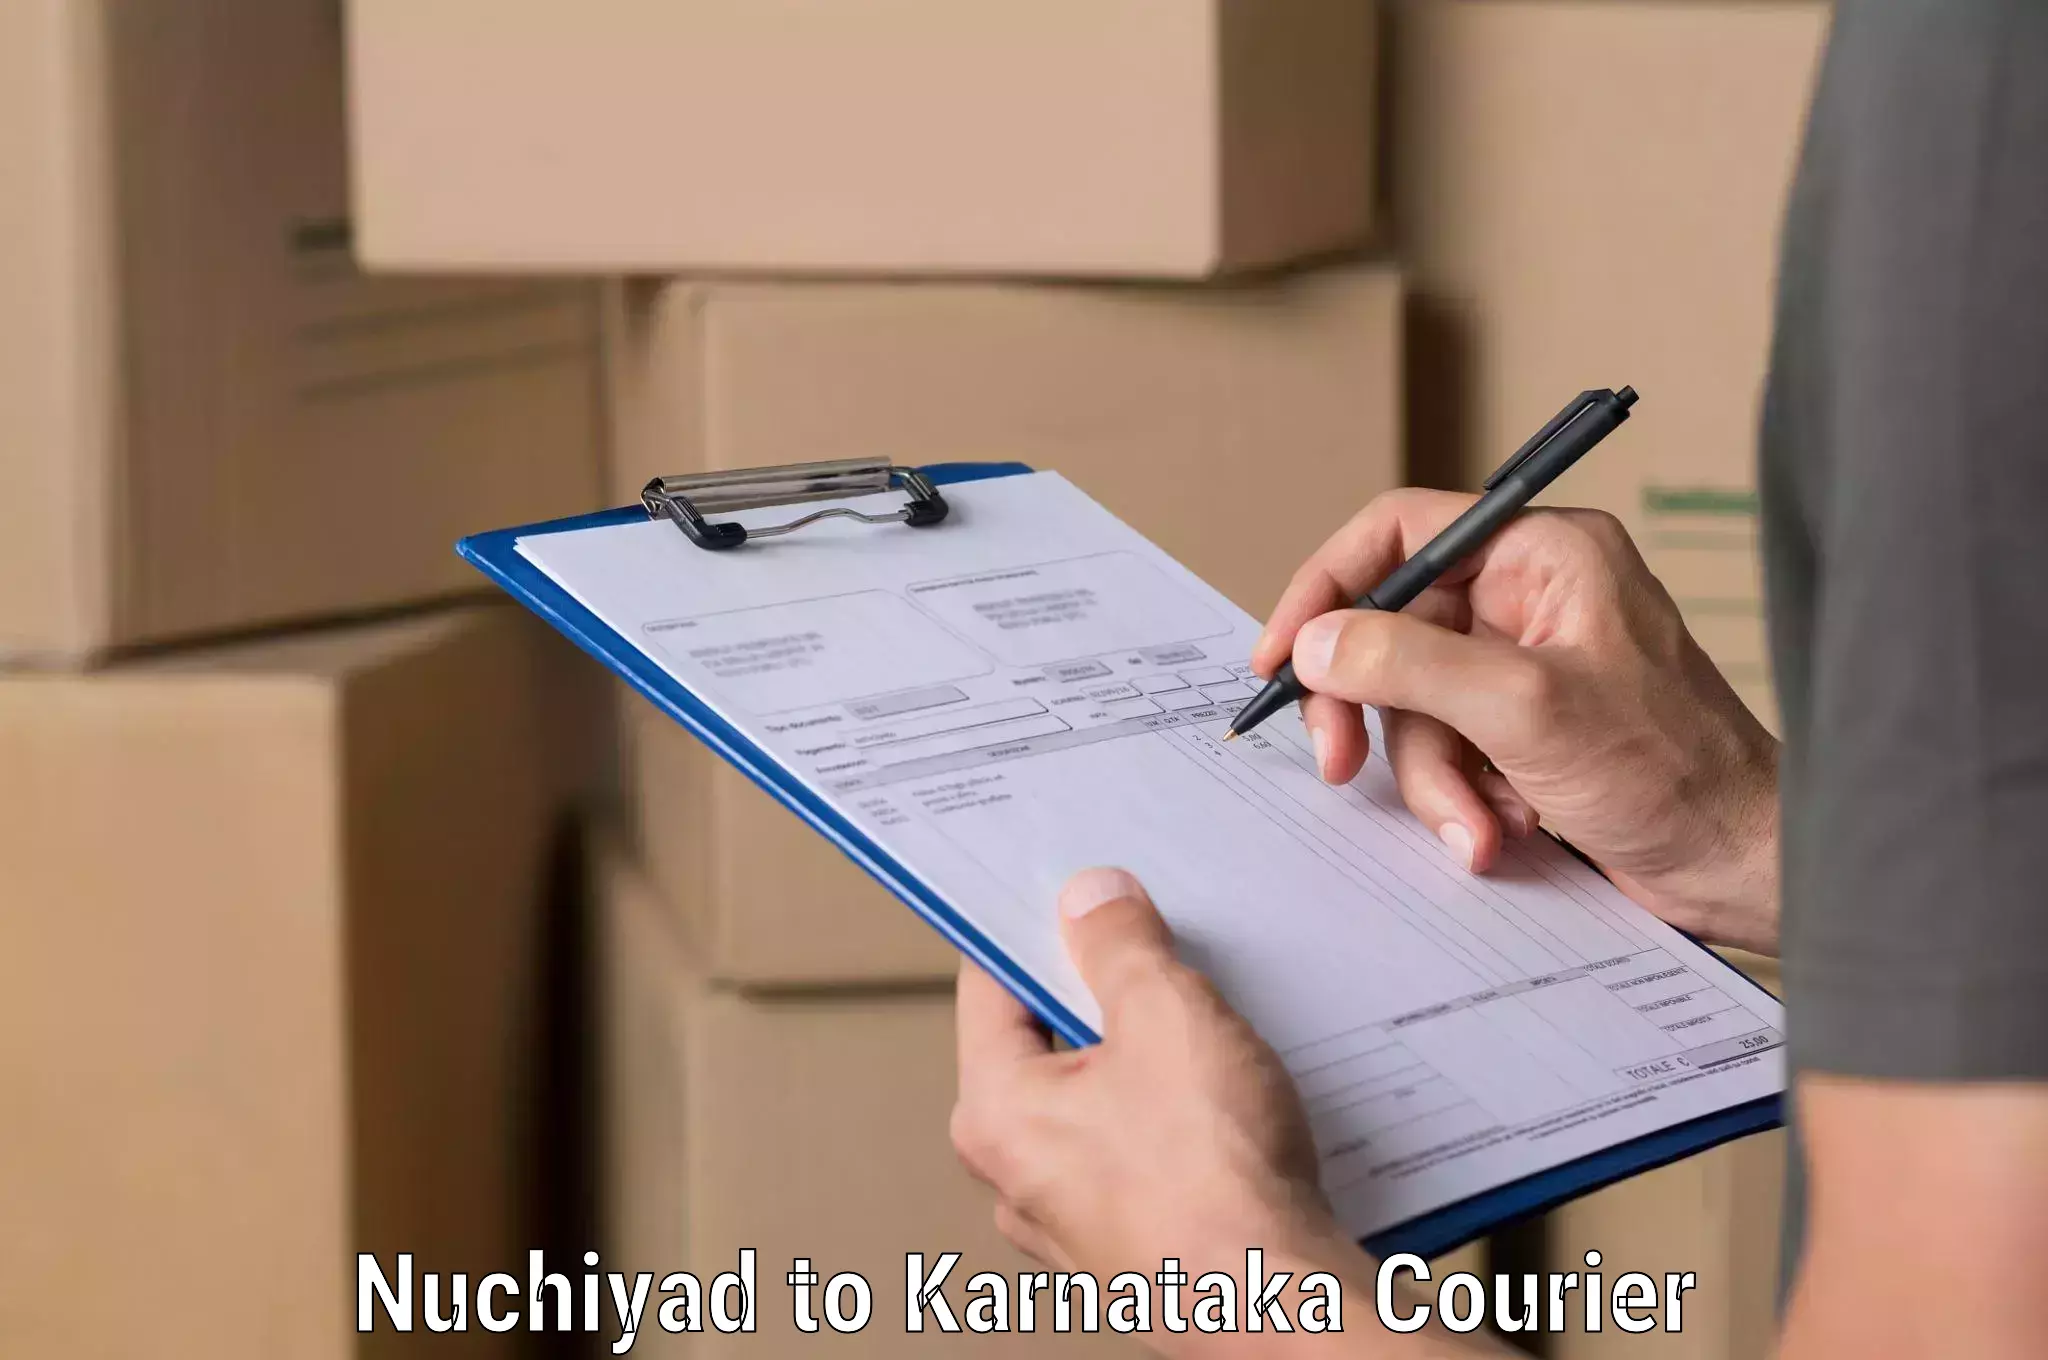 Speedy delivery service Nuchiyad to Mangalore Port